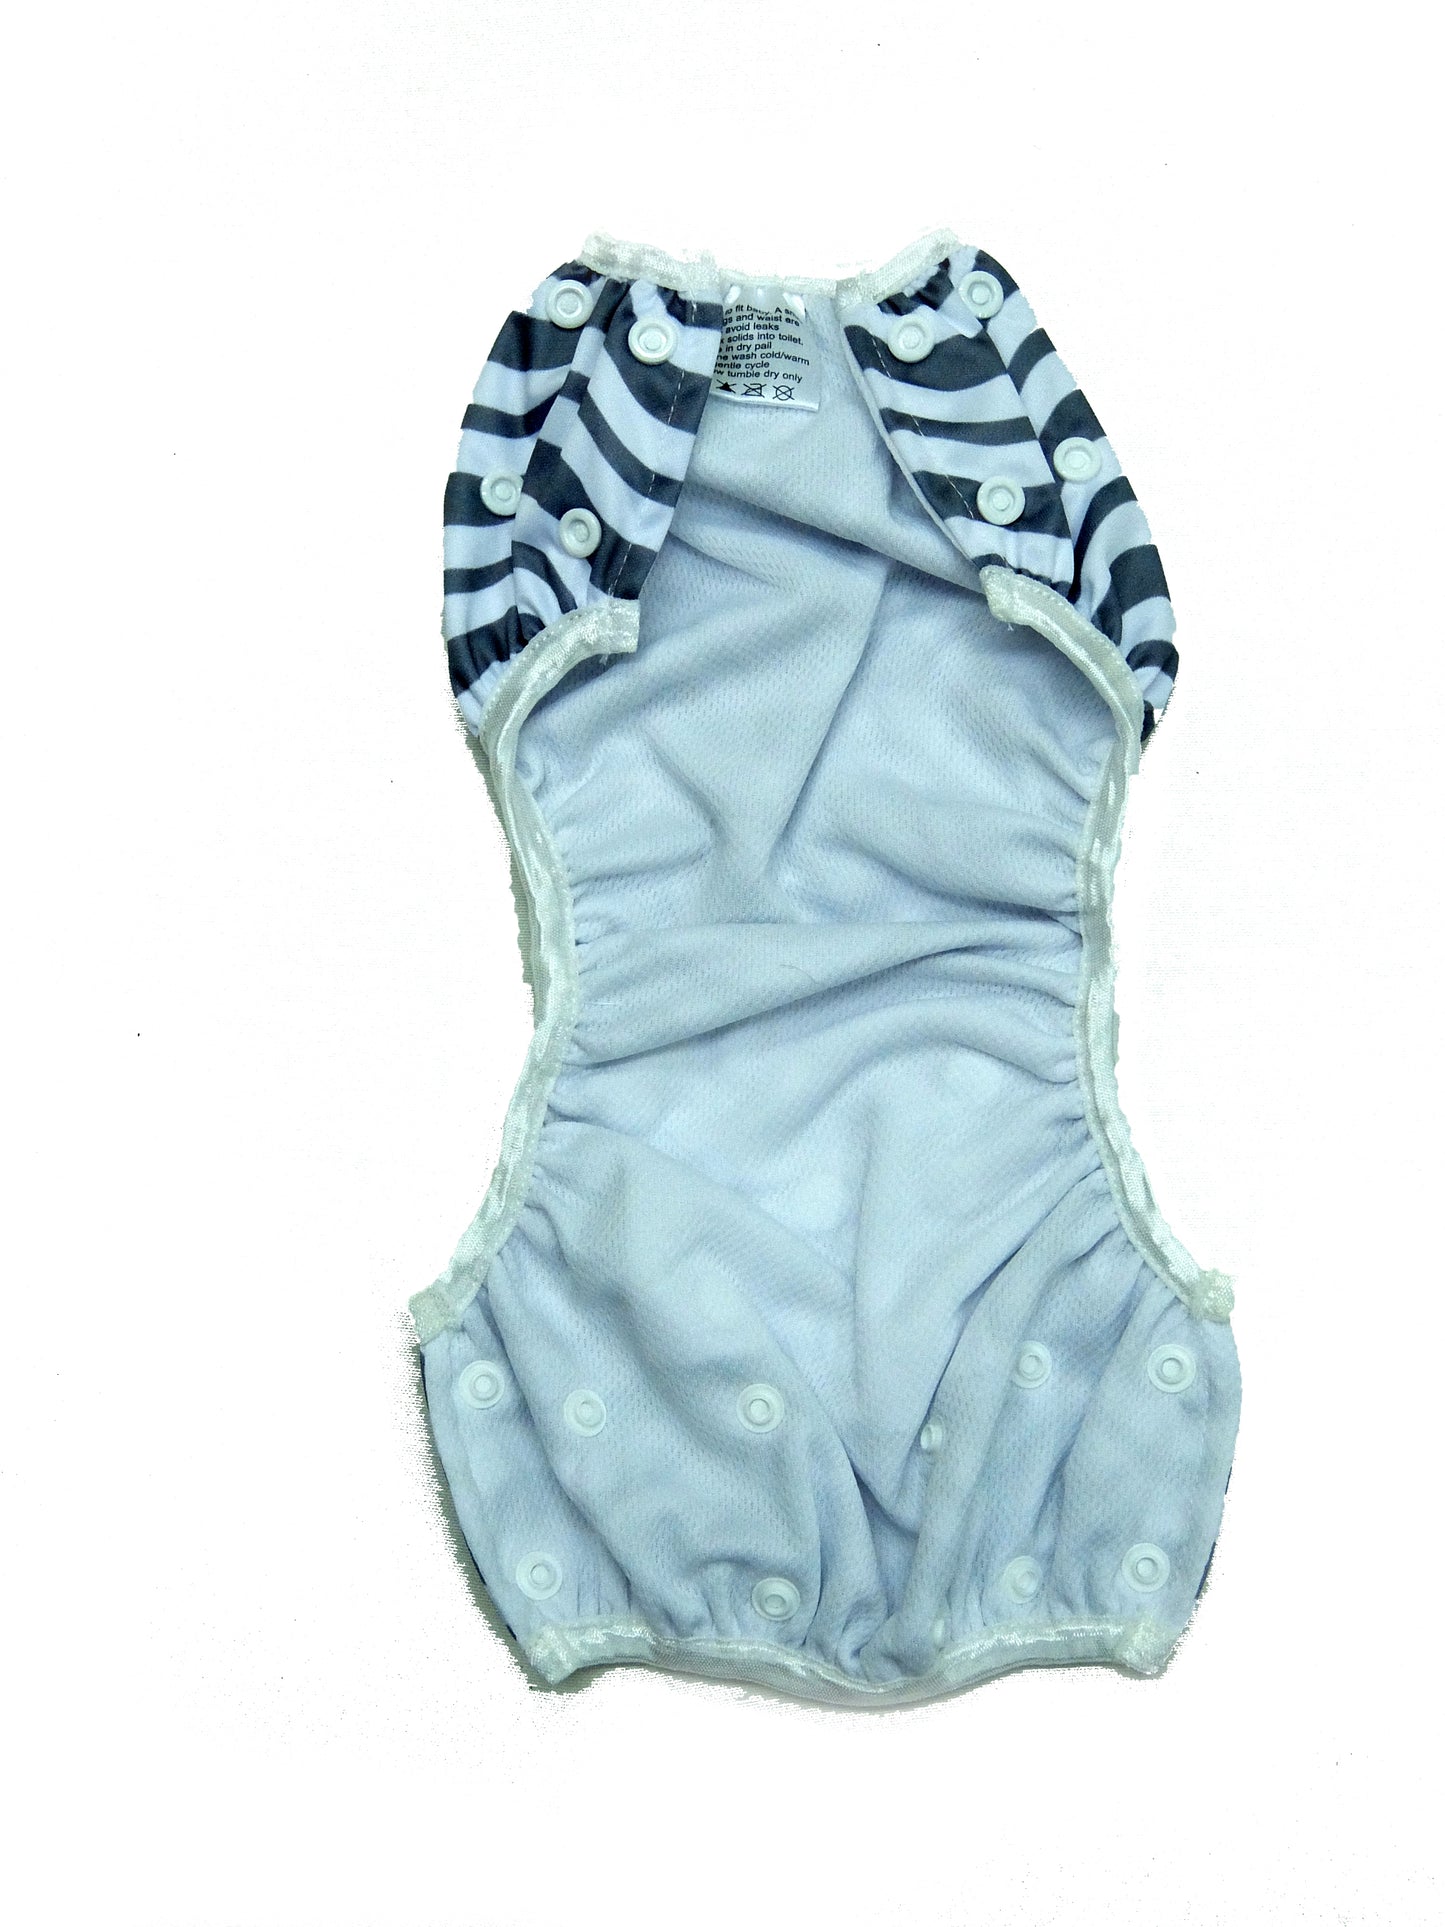 Next9 Swim Diapers Bloom Gray (assorted design)